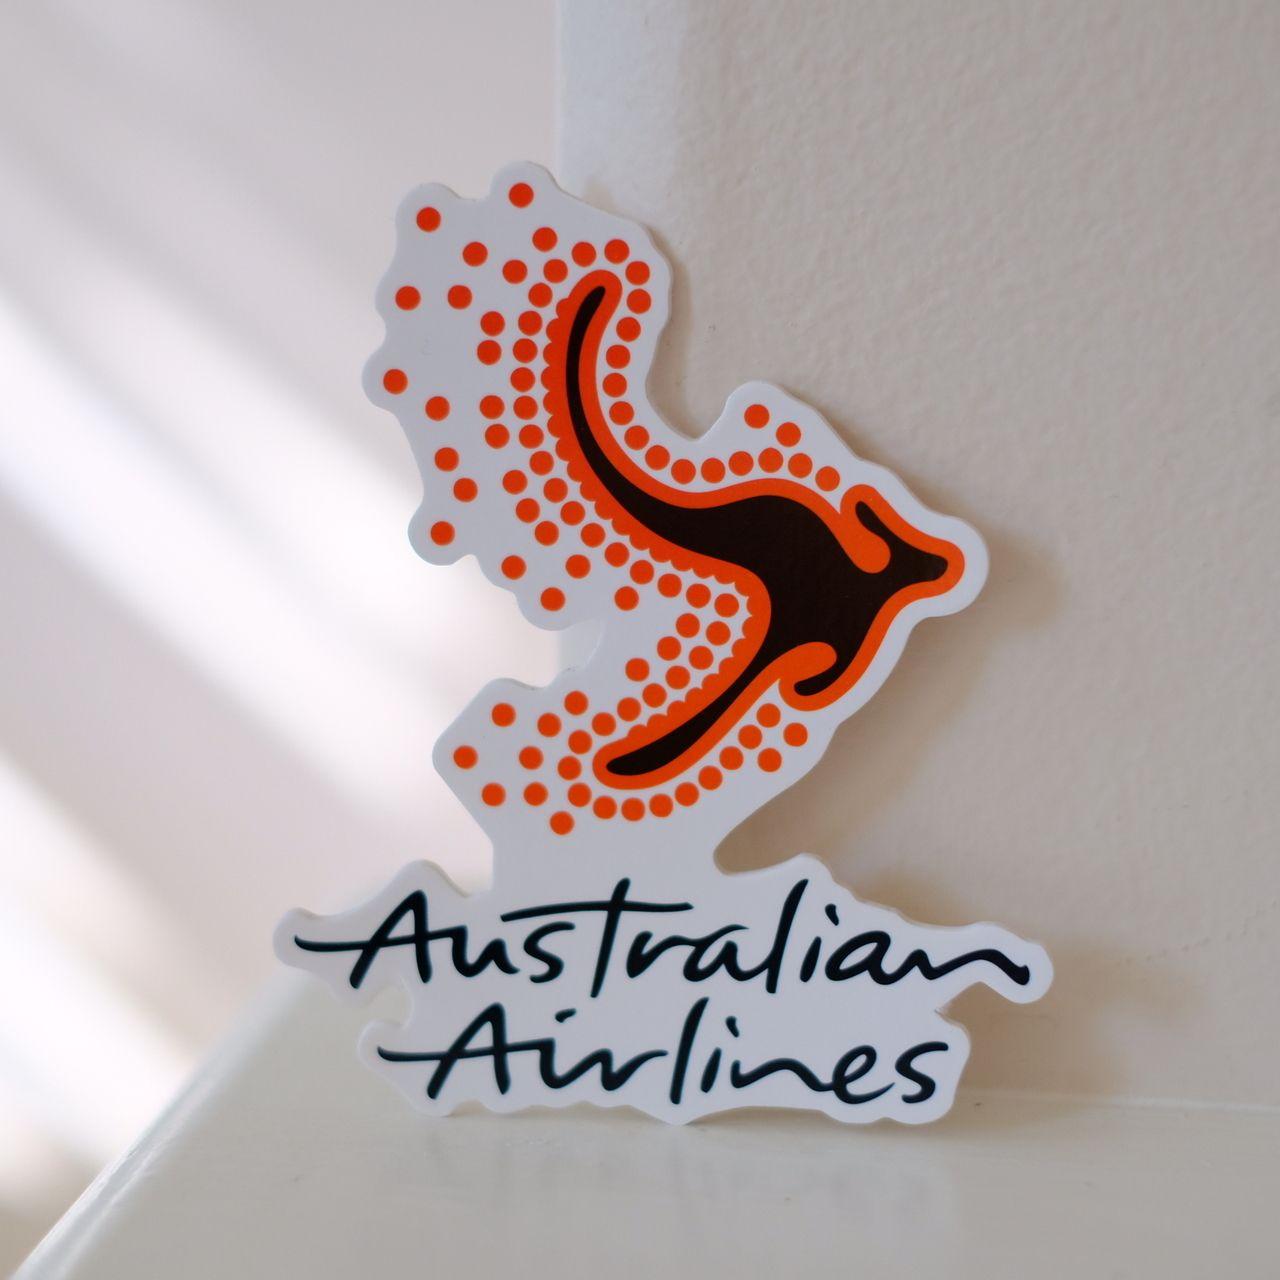 Australian Air Logo - Australian Airlines logo Air Travel waterproof 3x3.5 DECAL